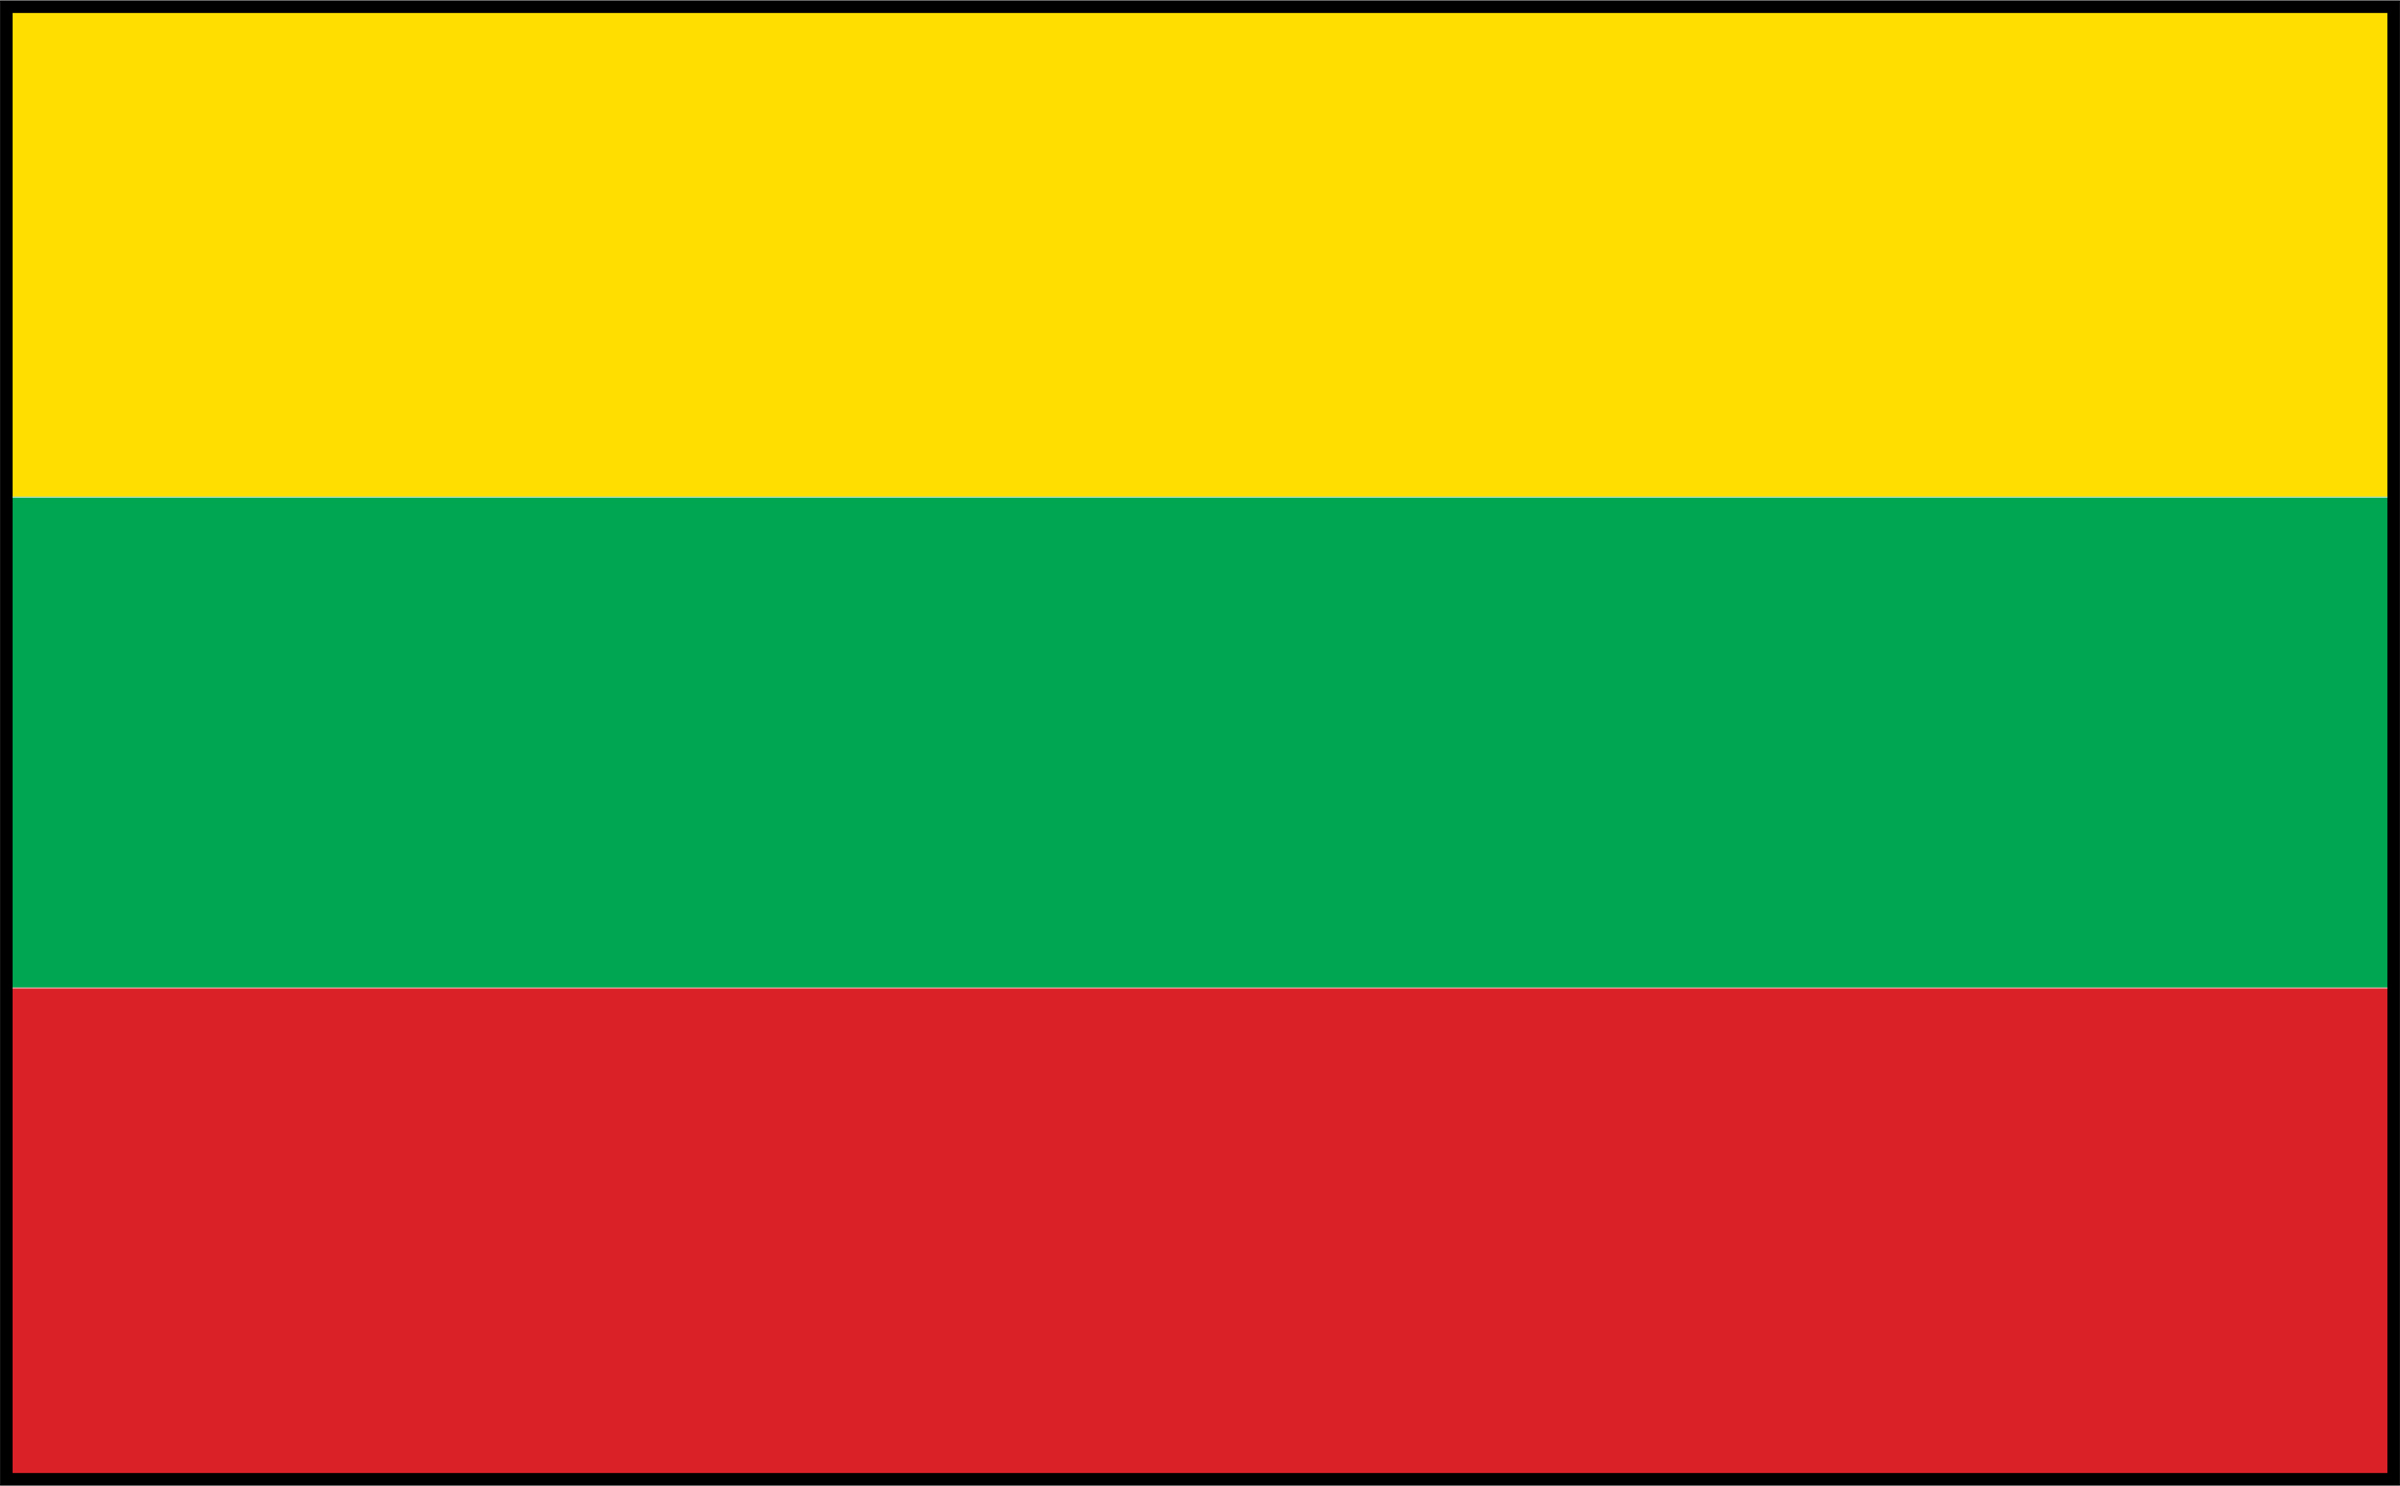 Image of Lithuania flag